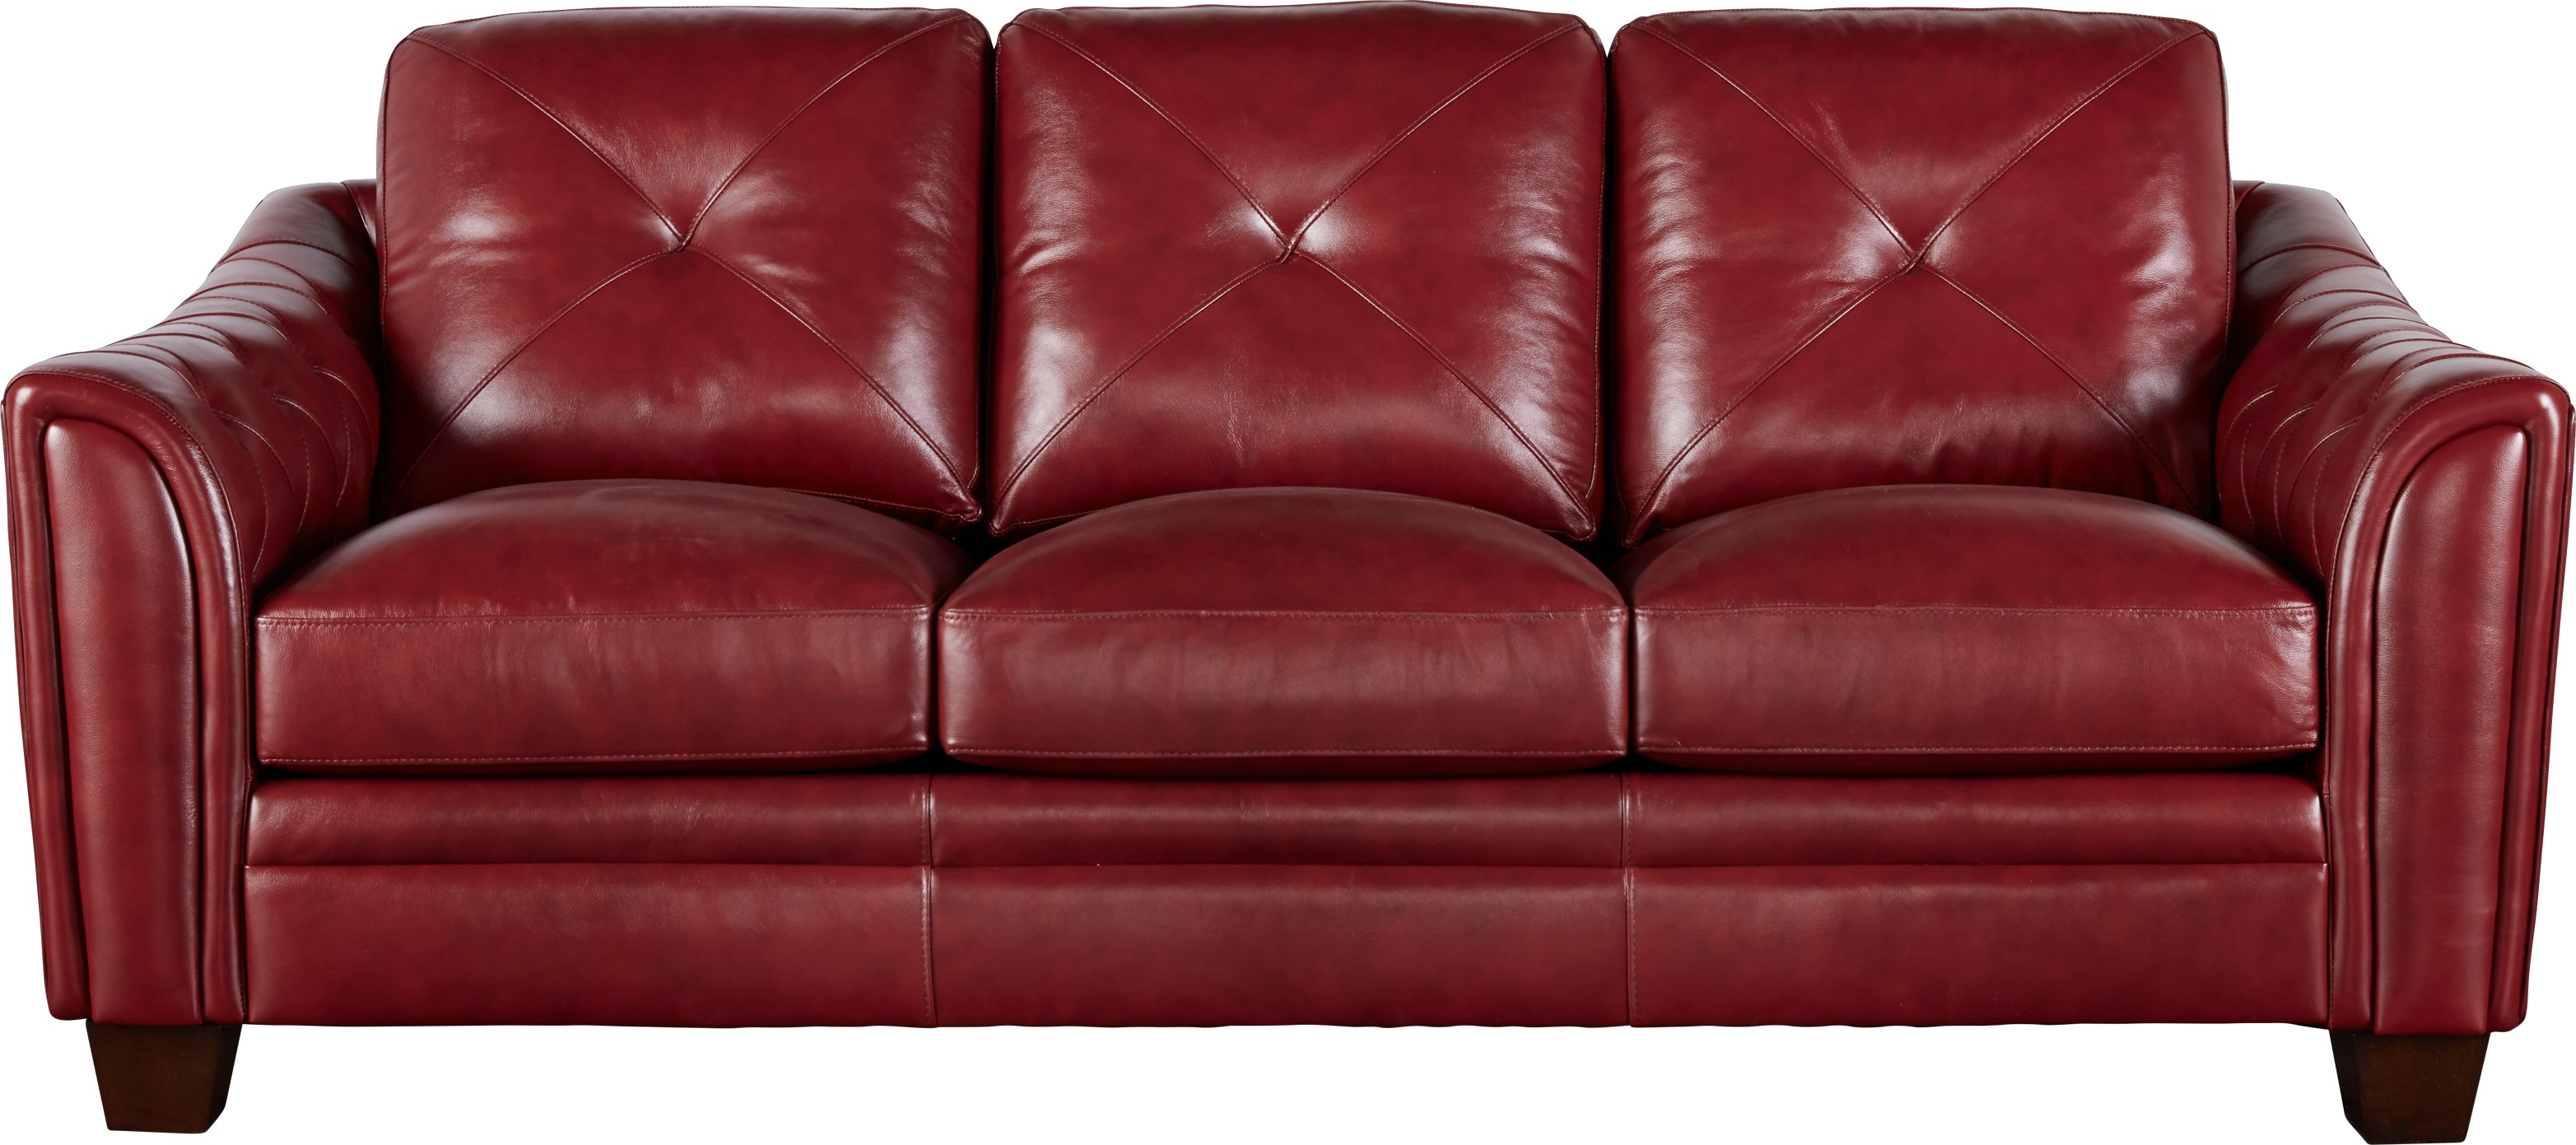 full grain red leather sofa